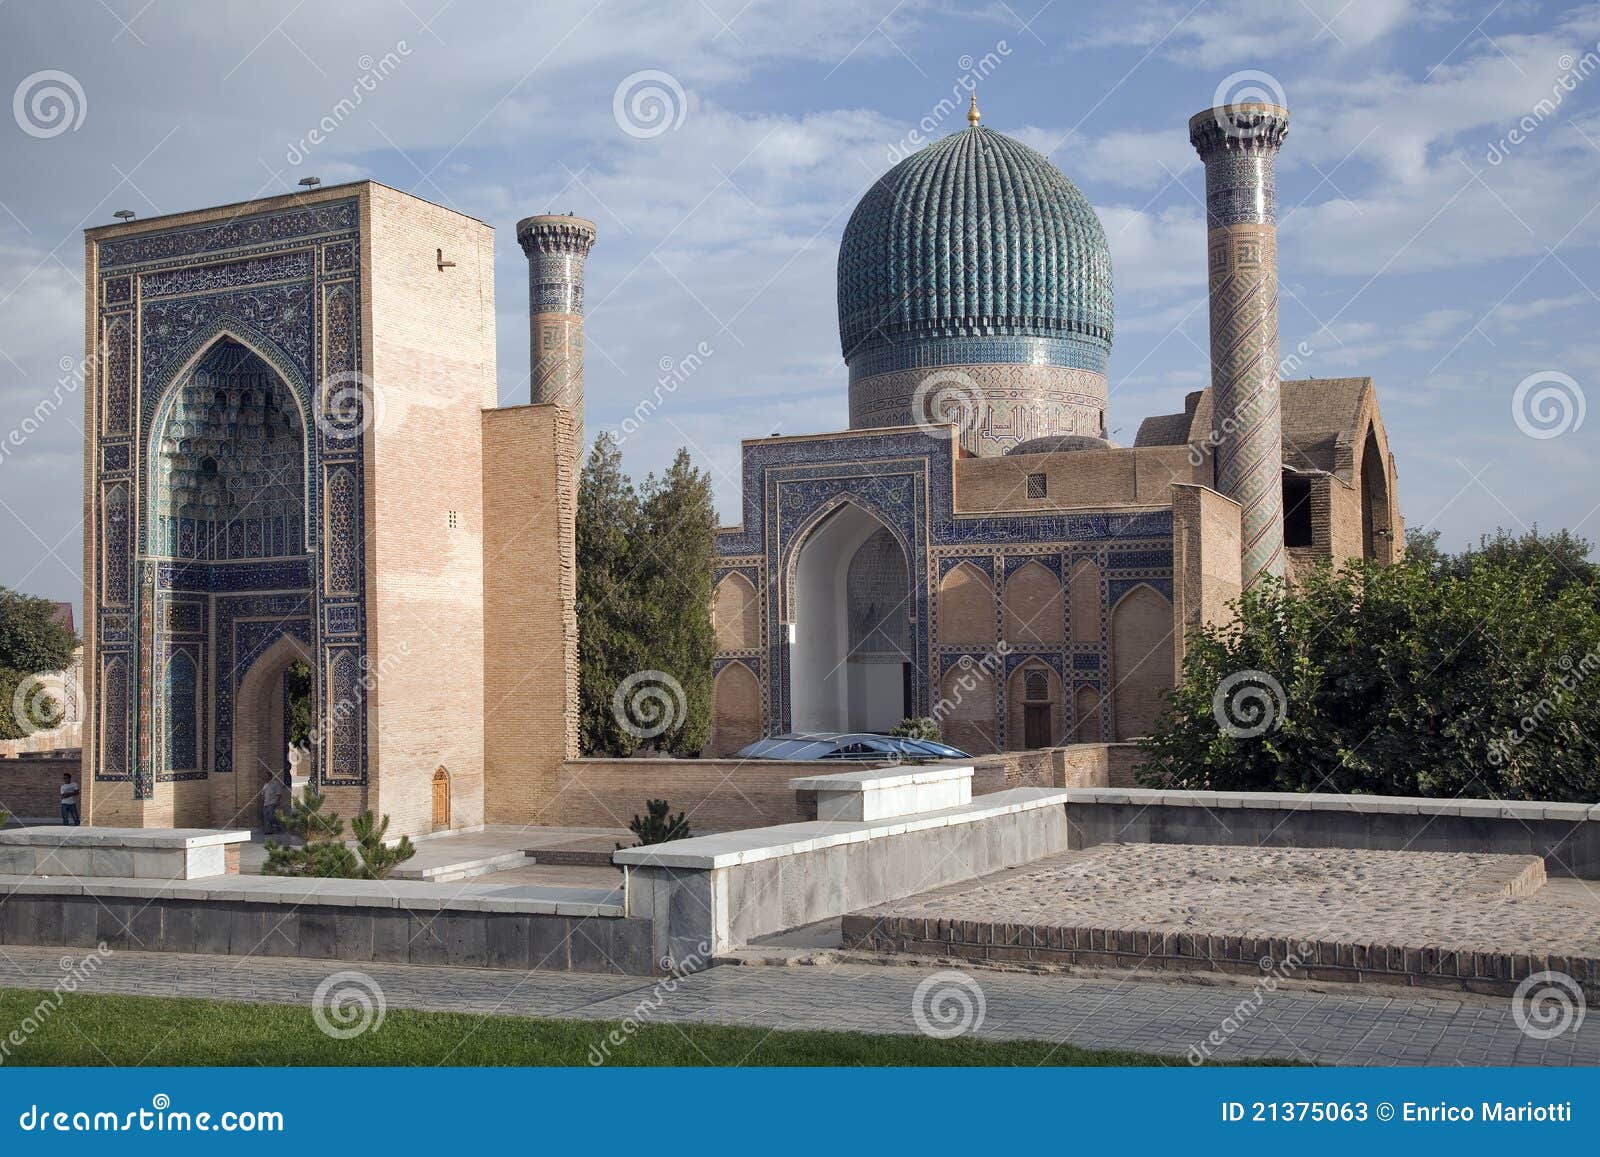 ancient mausoleum in uzbekistan